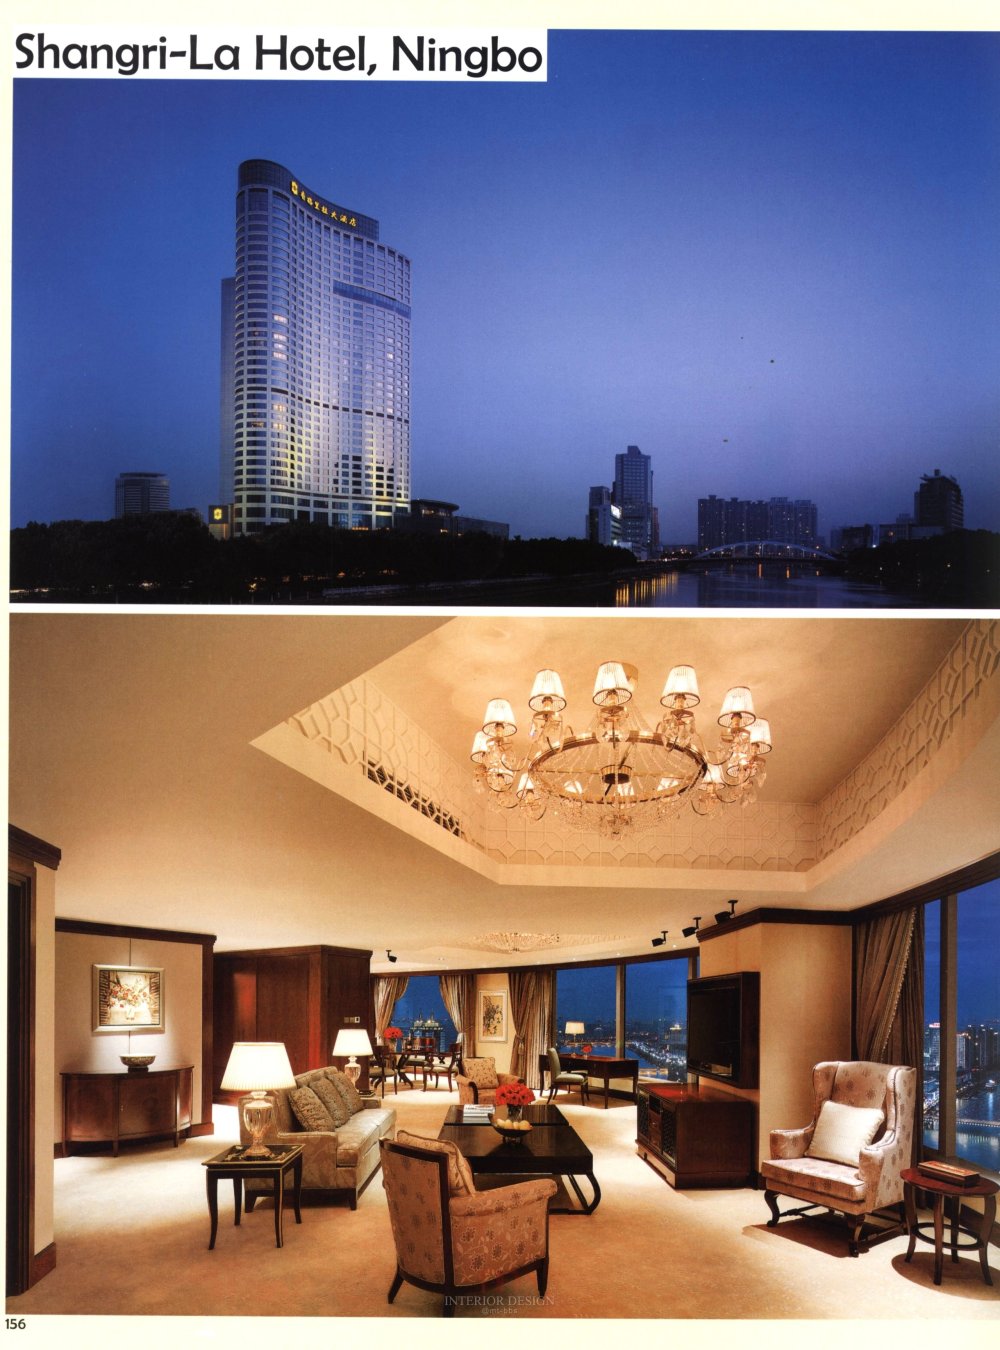 101全球酒店客房 101HOTELS GUEST ROOMS_图站_AiJpgg_com_151.jpg